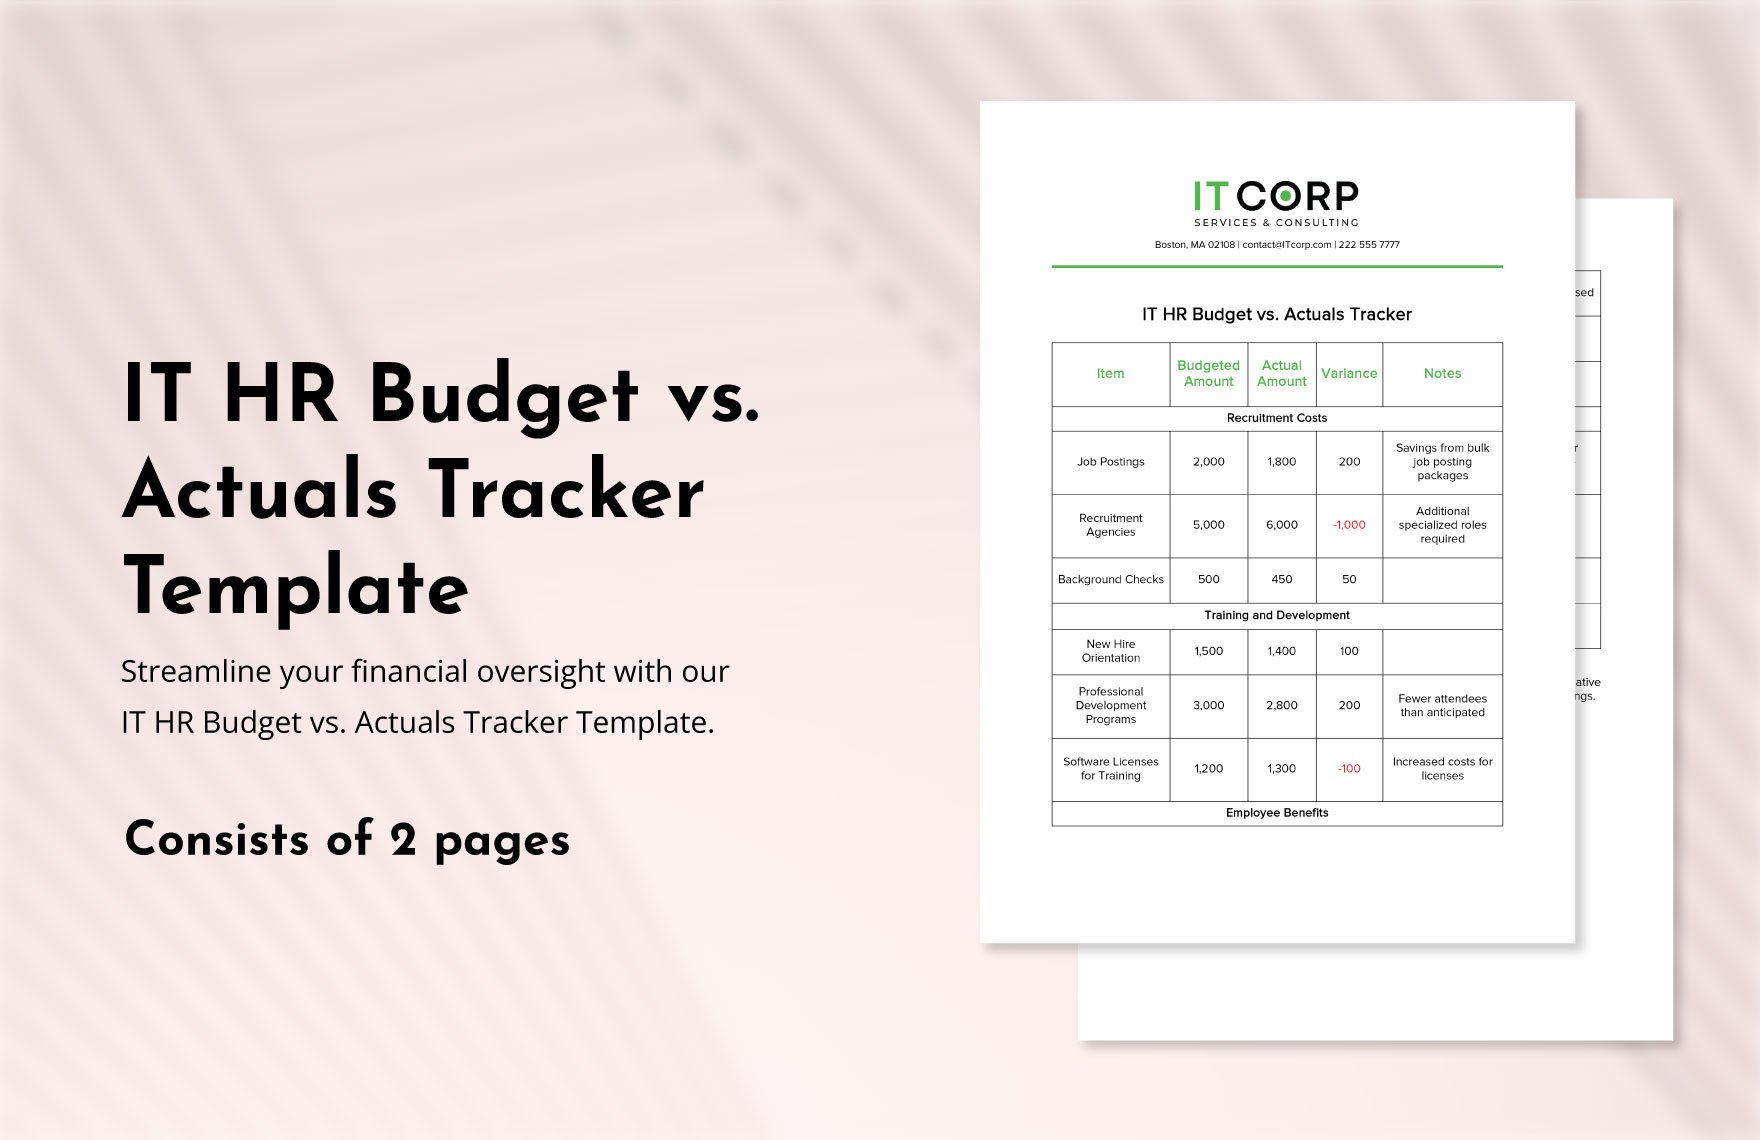 IT HR Budget vs. Actuals Tracker Template